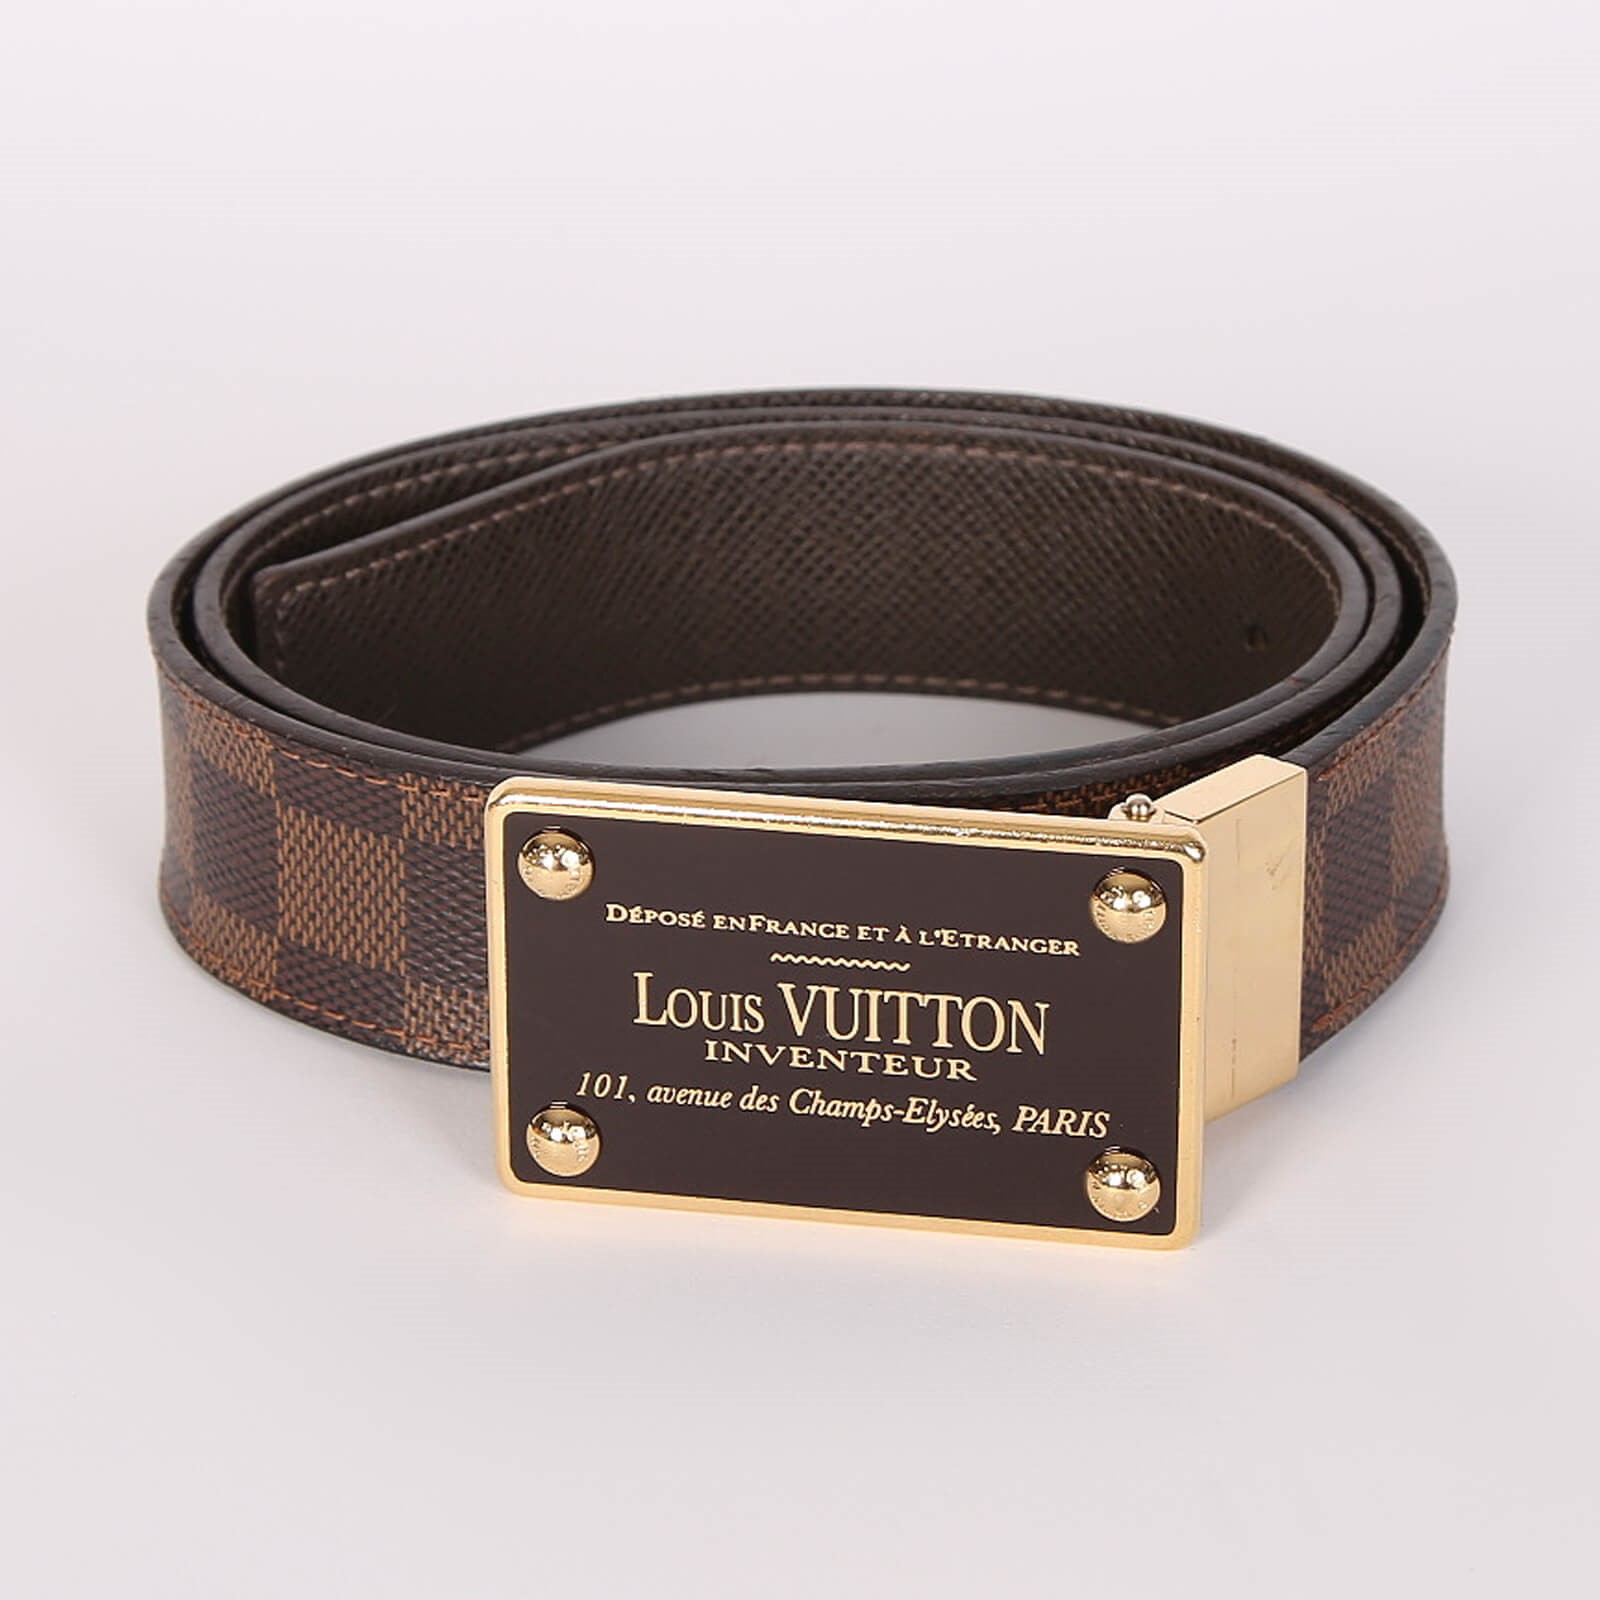 Louis Vuitton Belt Size 46 Czech Republic, SAVE 57% 